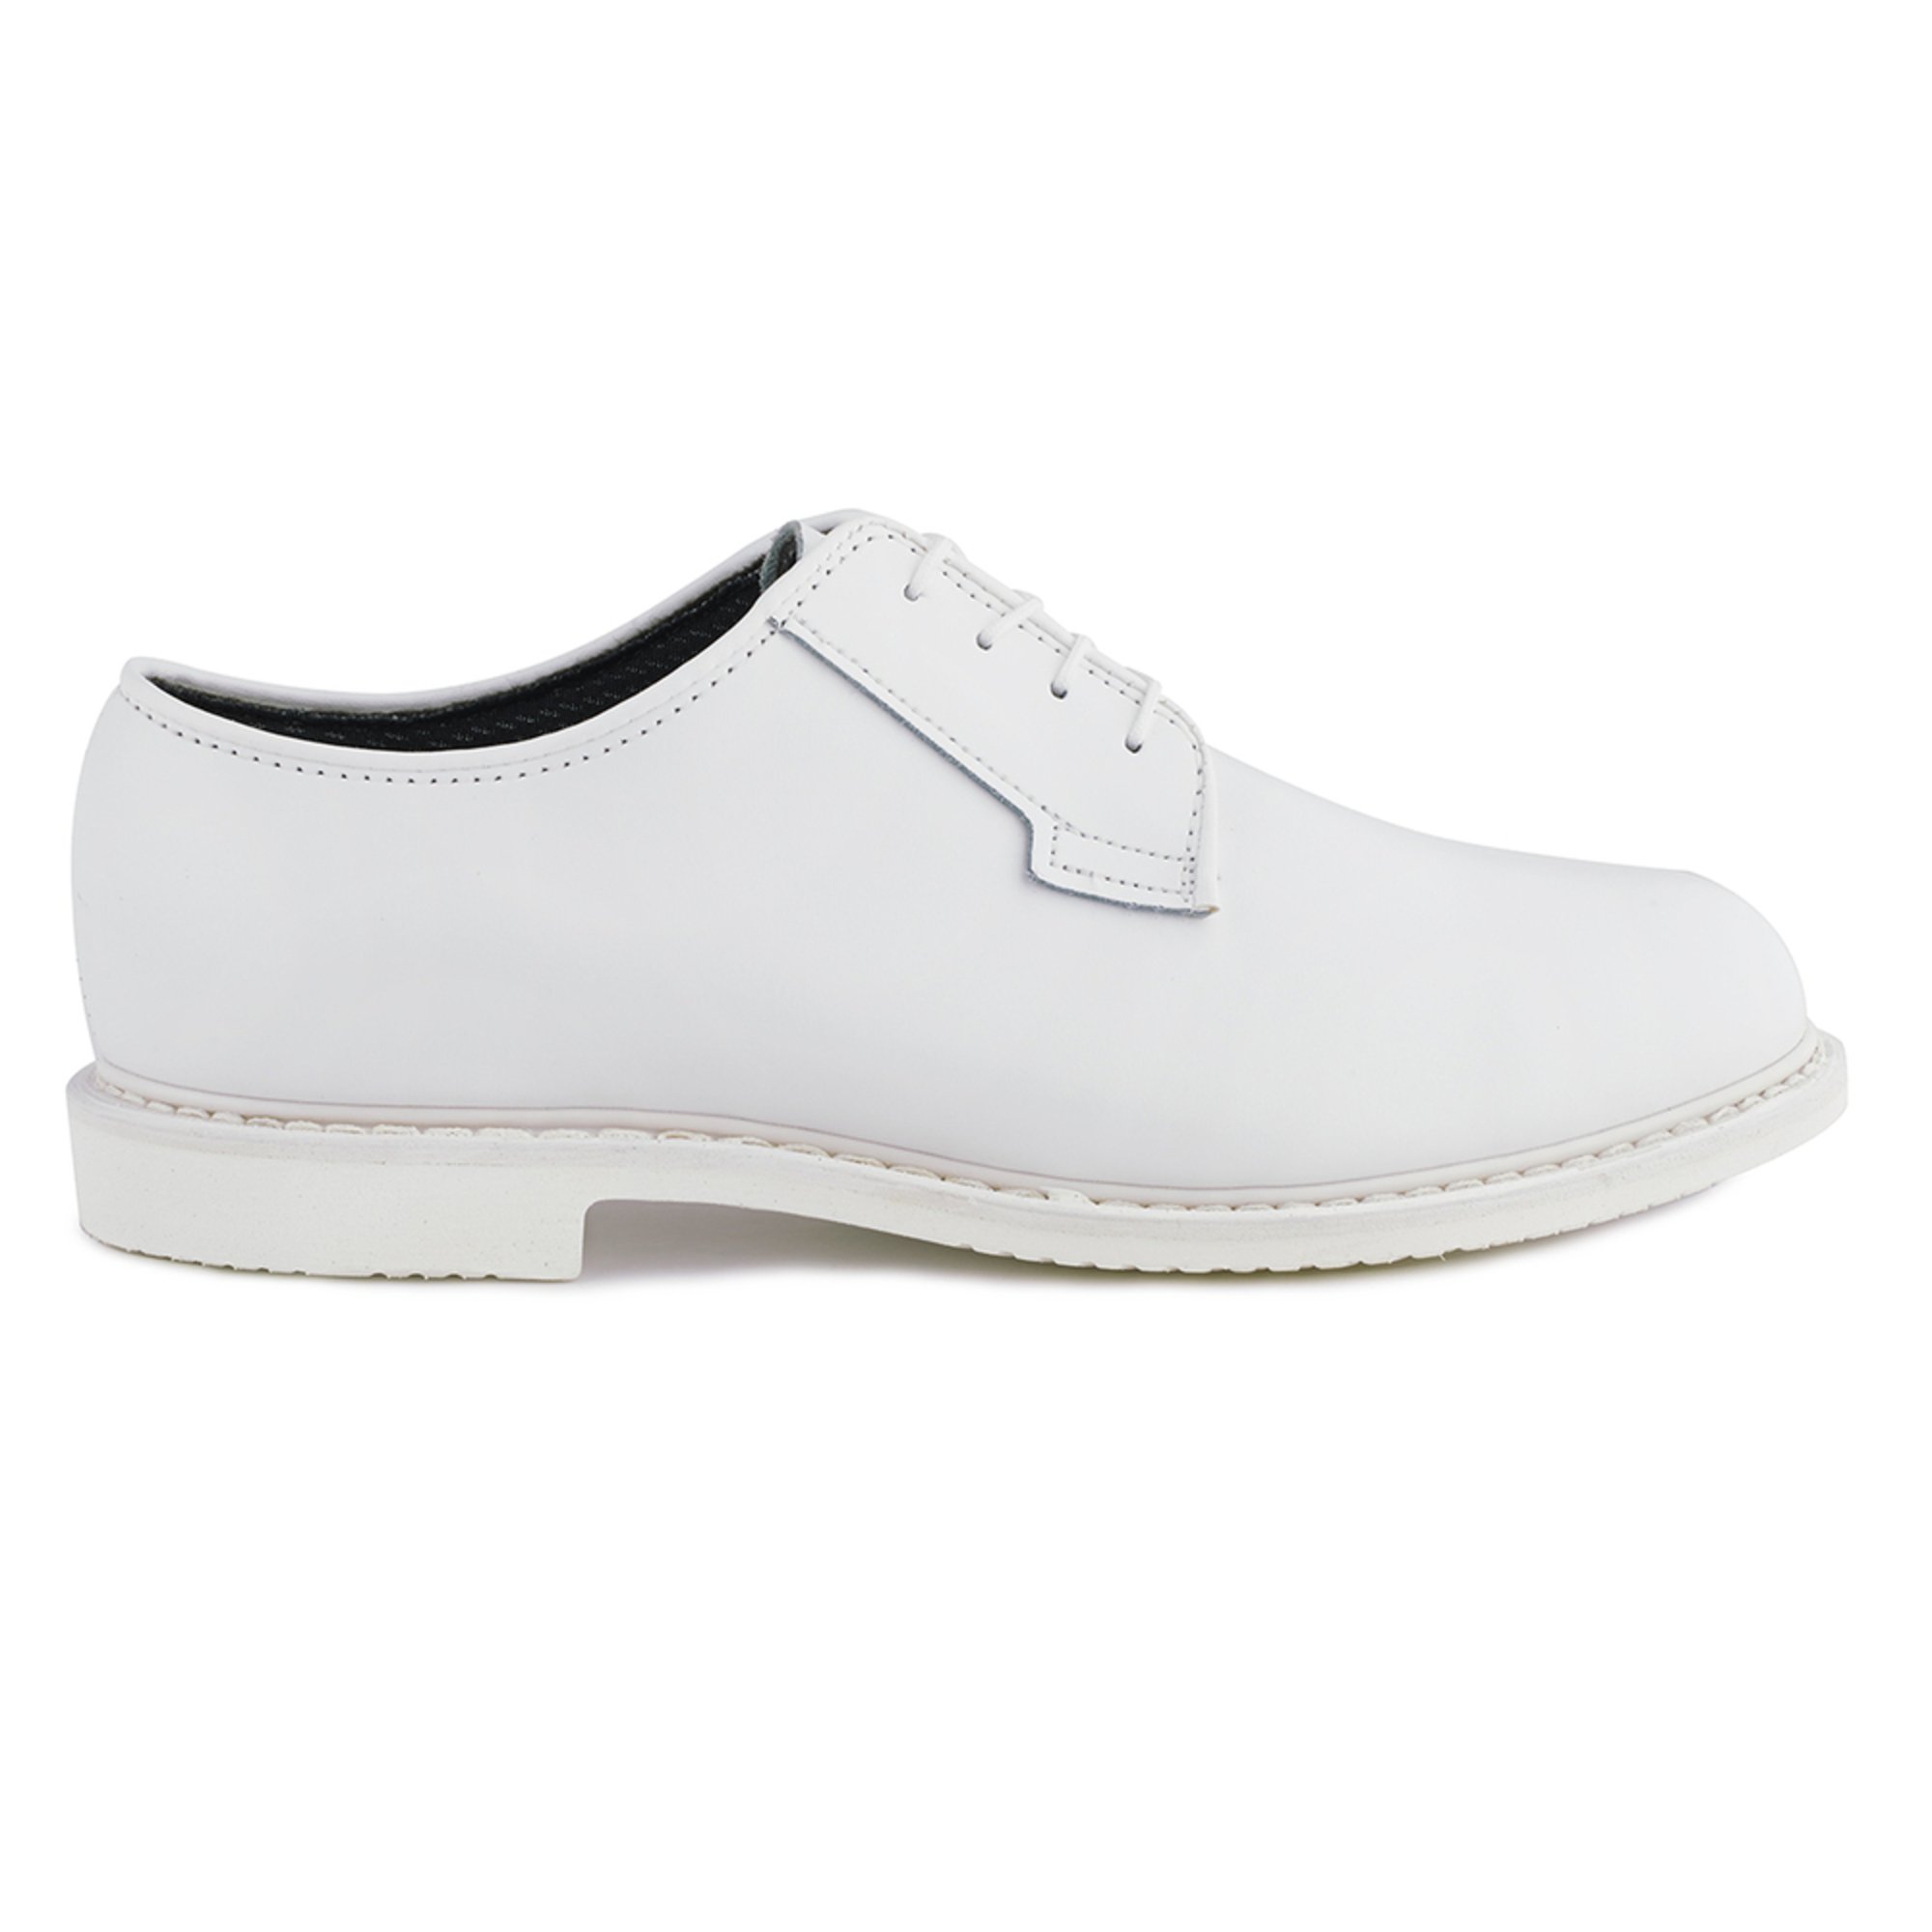 white oxfords women's shoes